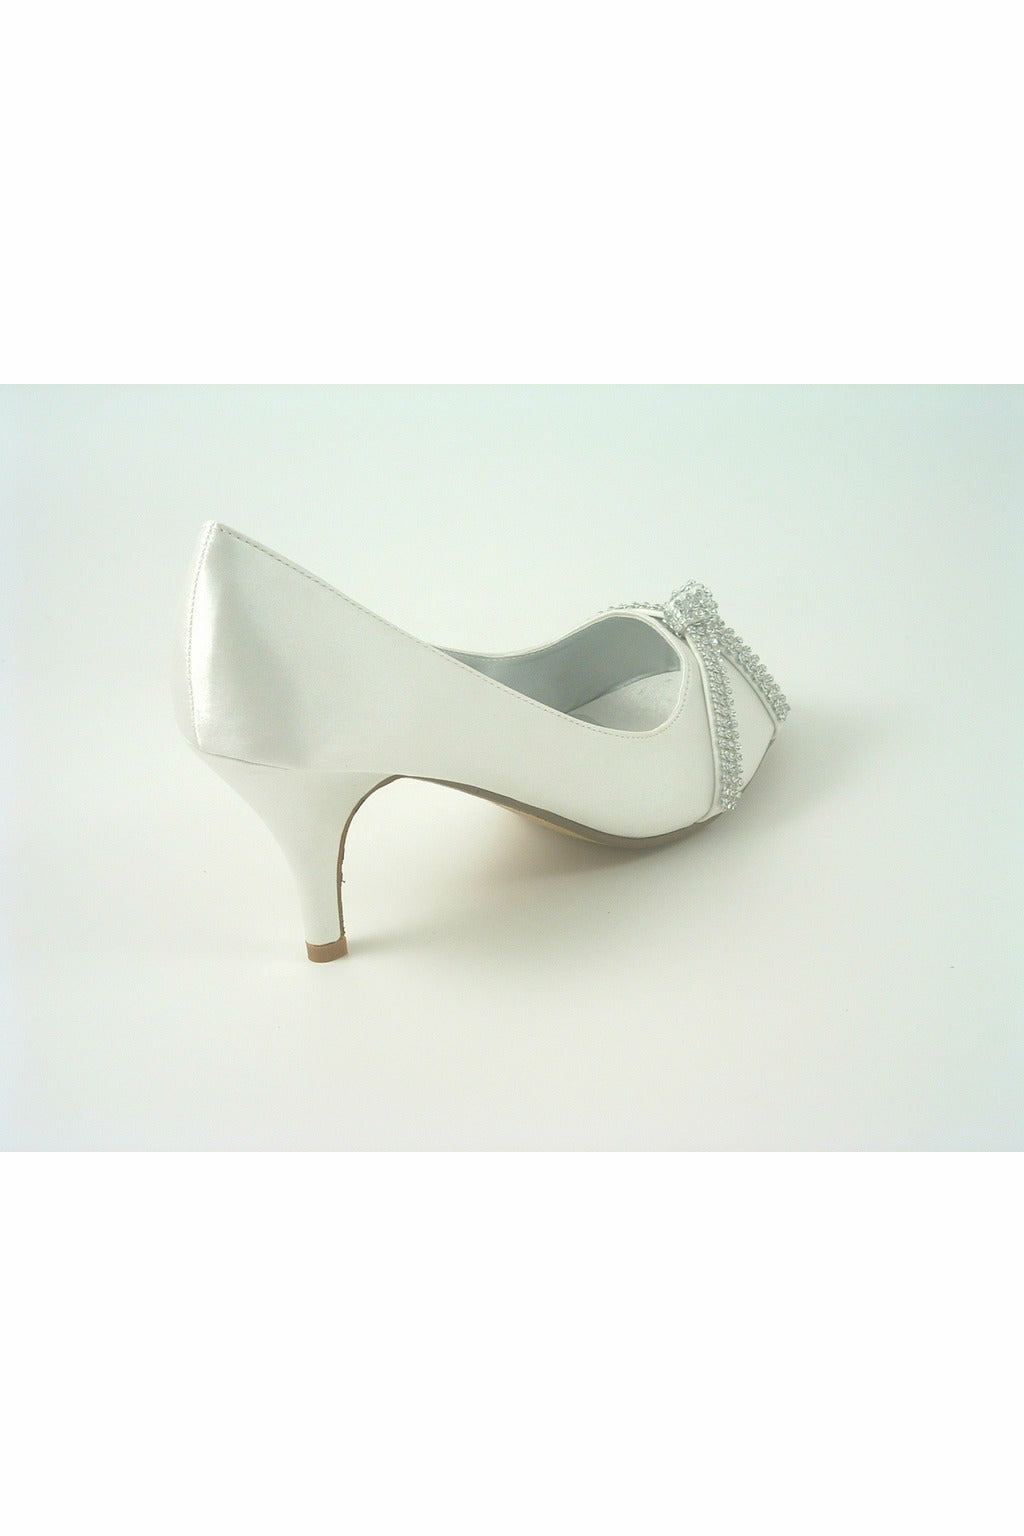 Diamante Metallic Peep Toe Court Shoe Flora29645